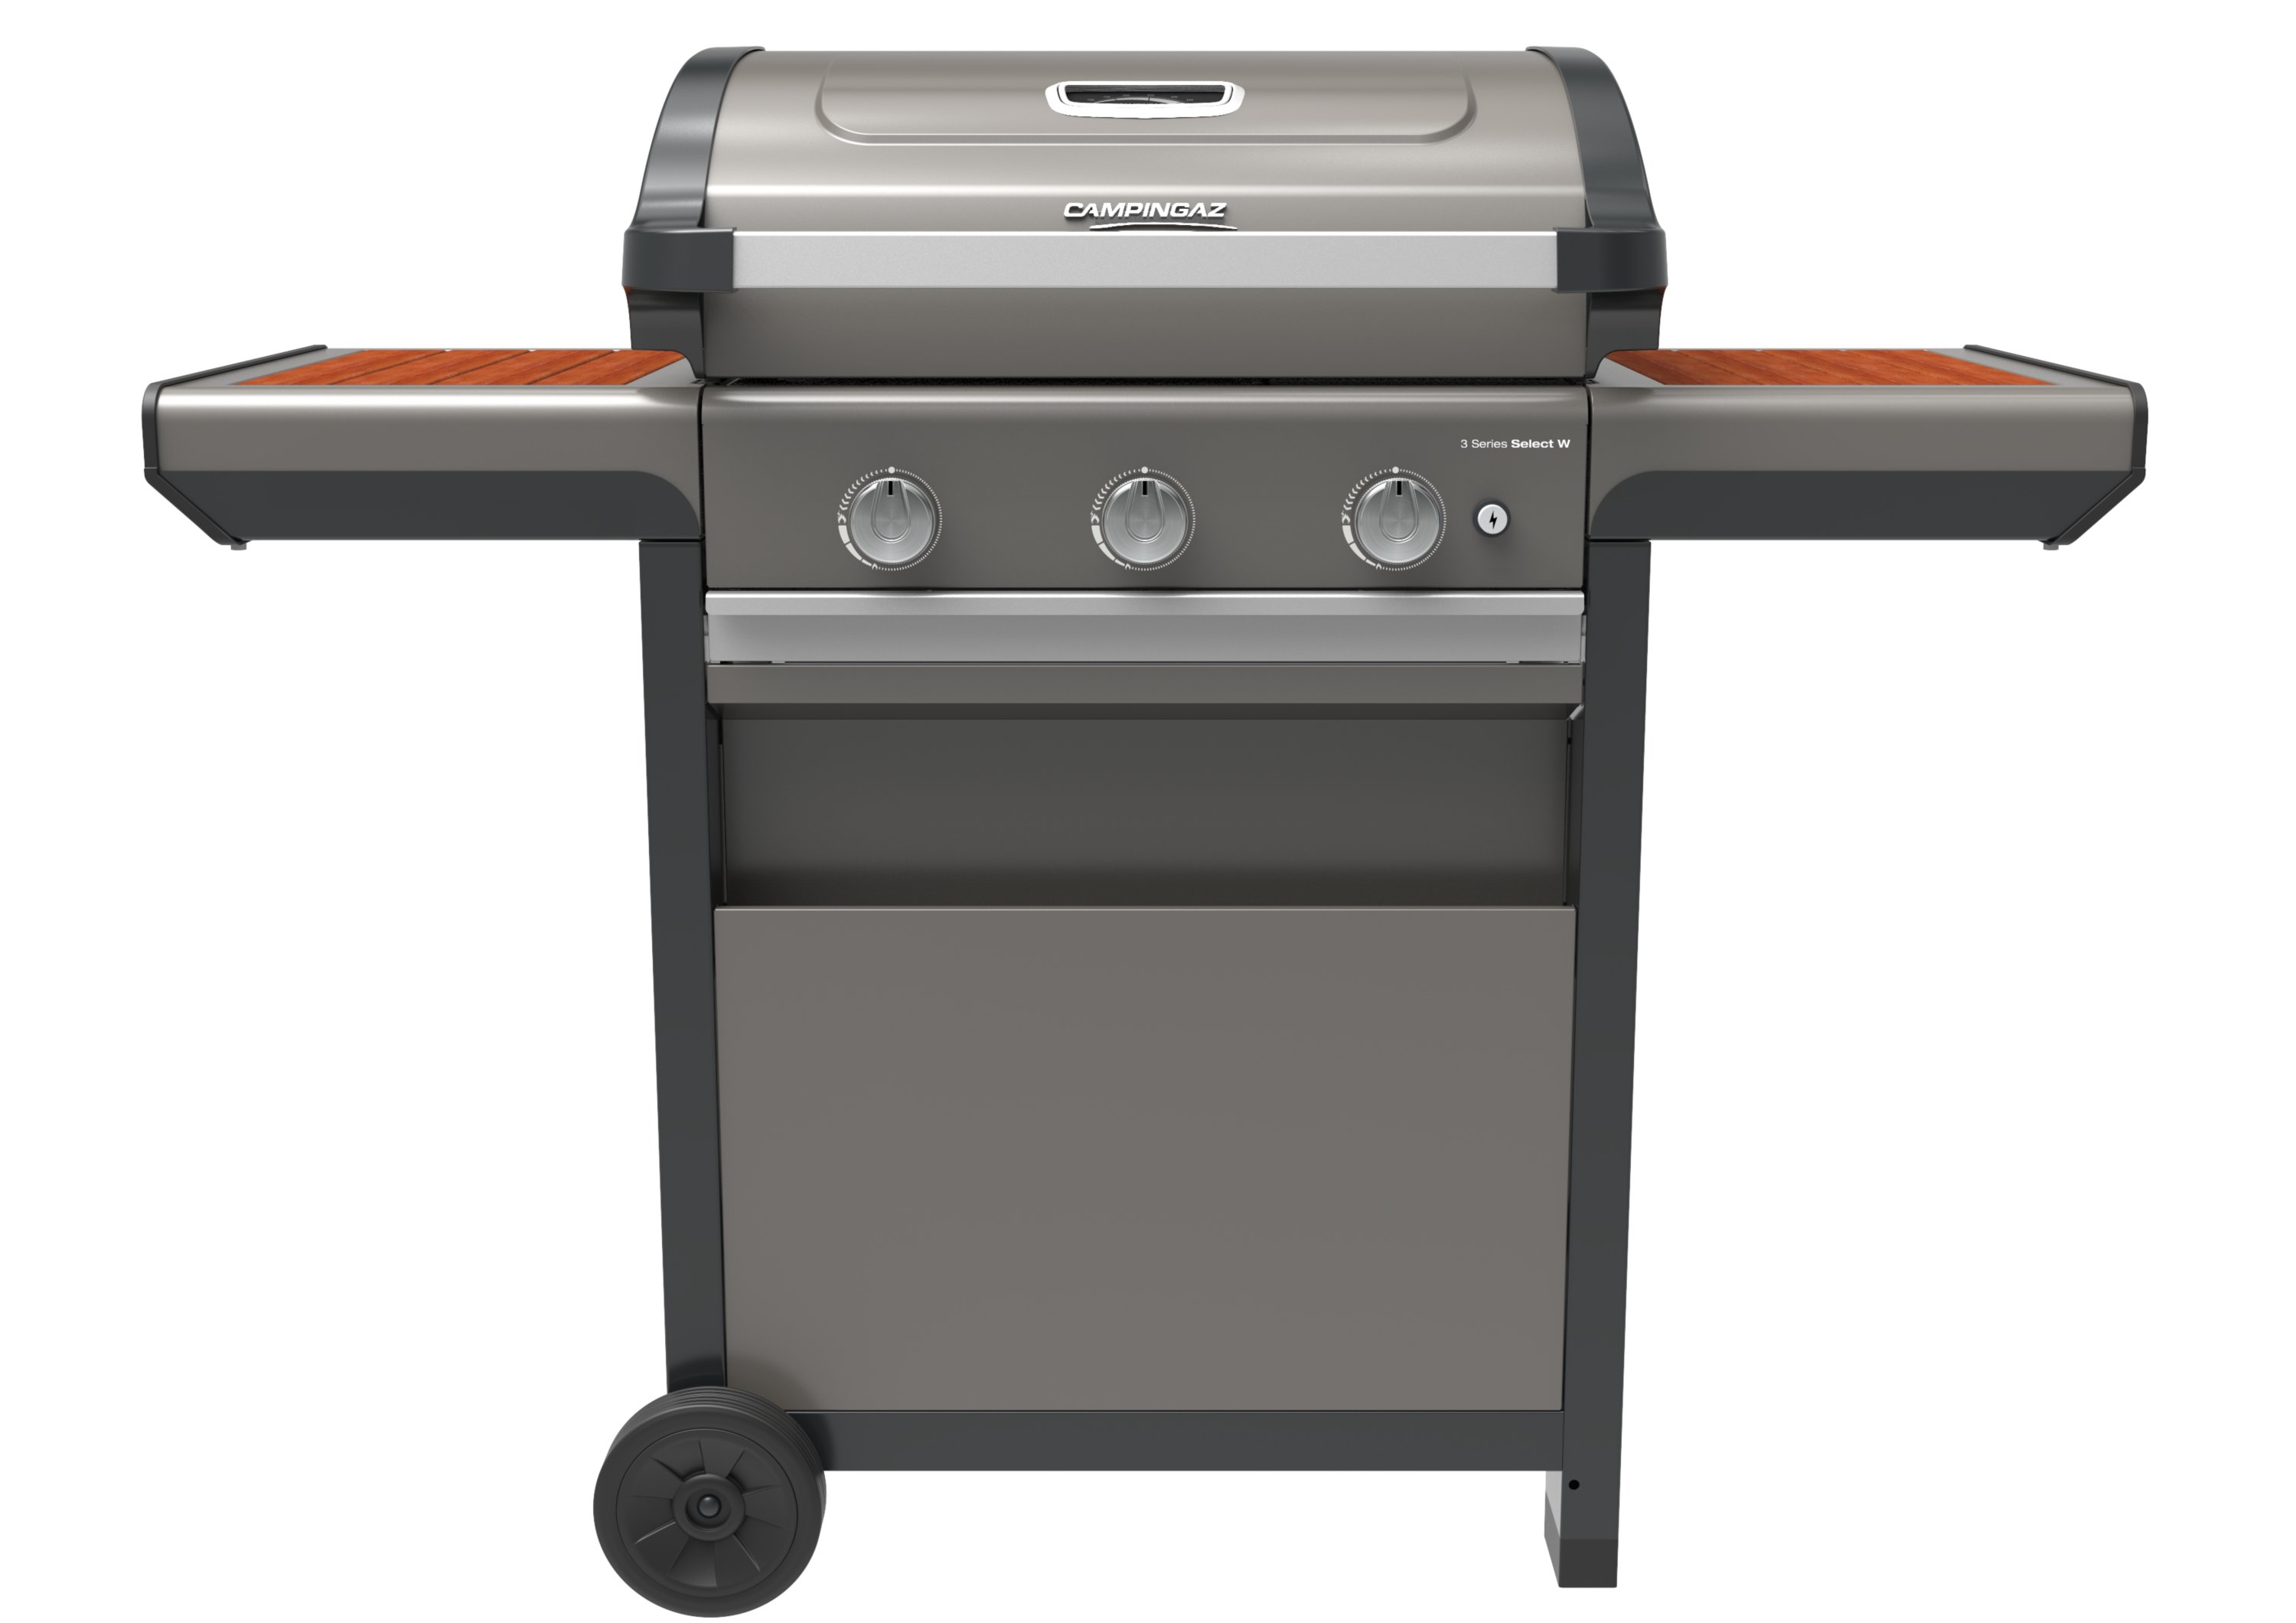 Barbecue : zoom sur la cuisson verticale